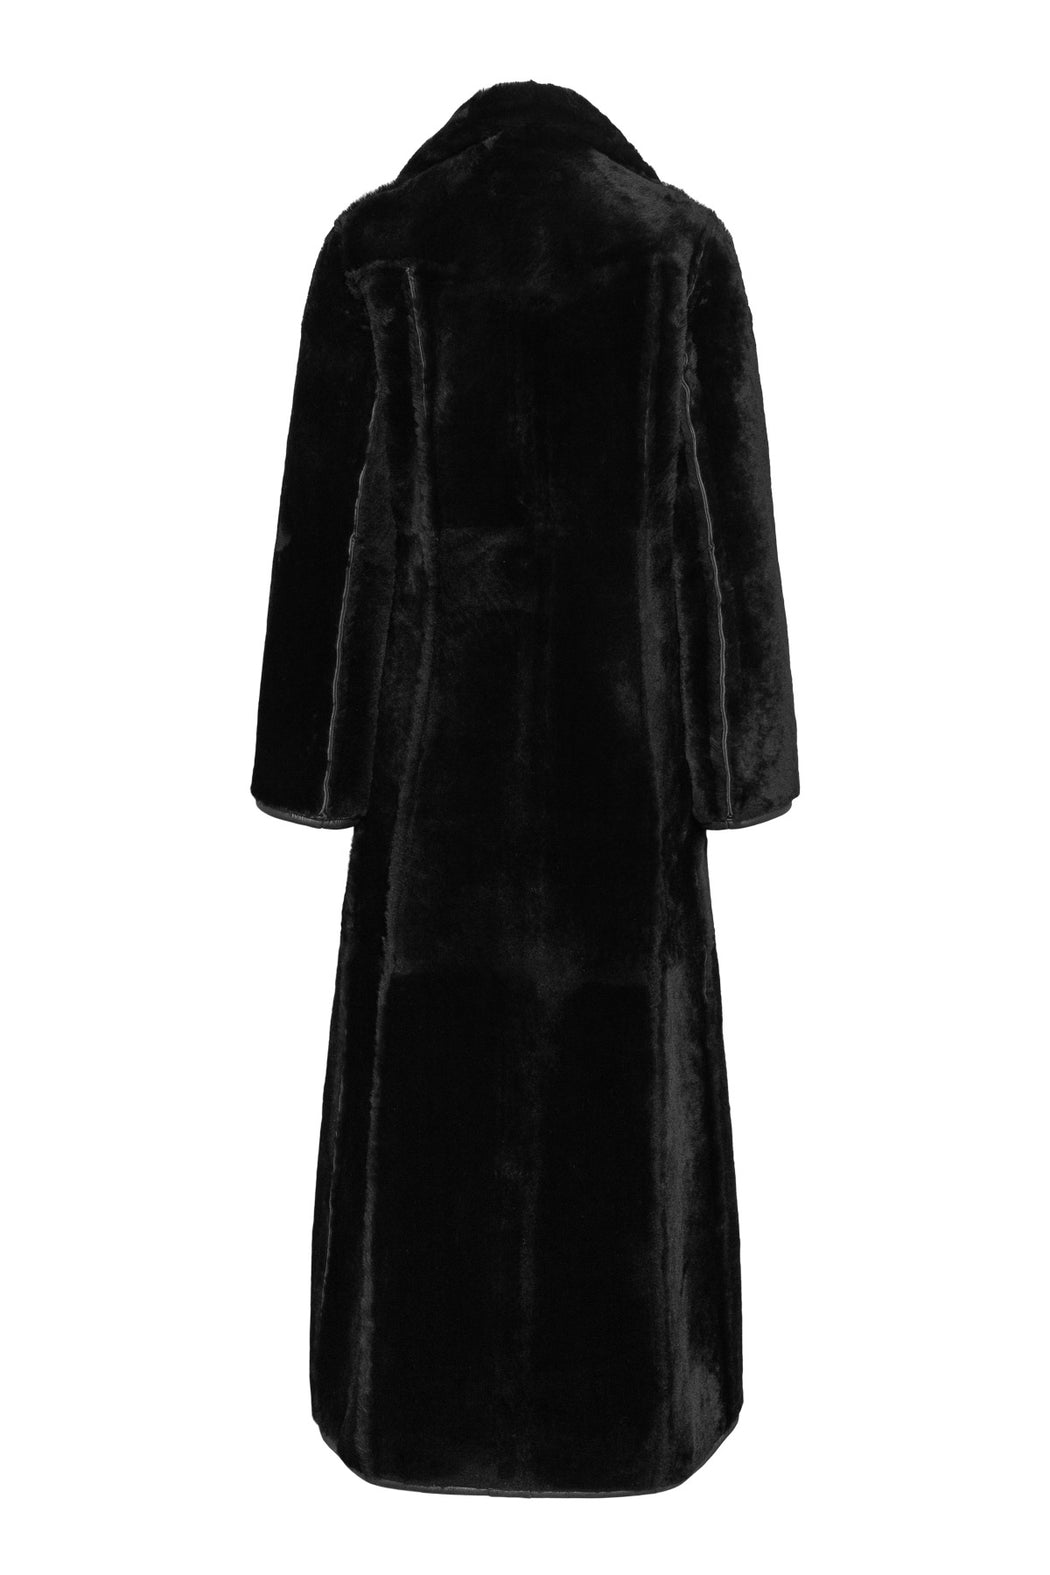 Envelope1976 Woodstock coat II - Shearling Coat Black